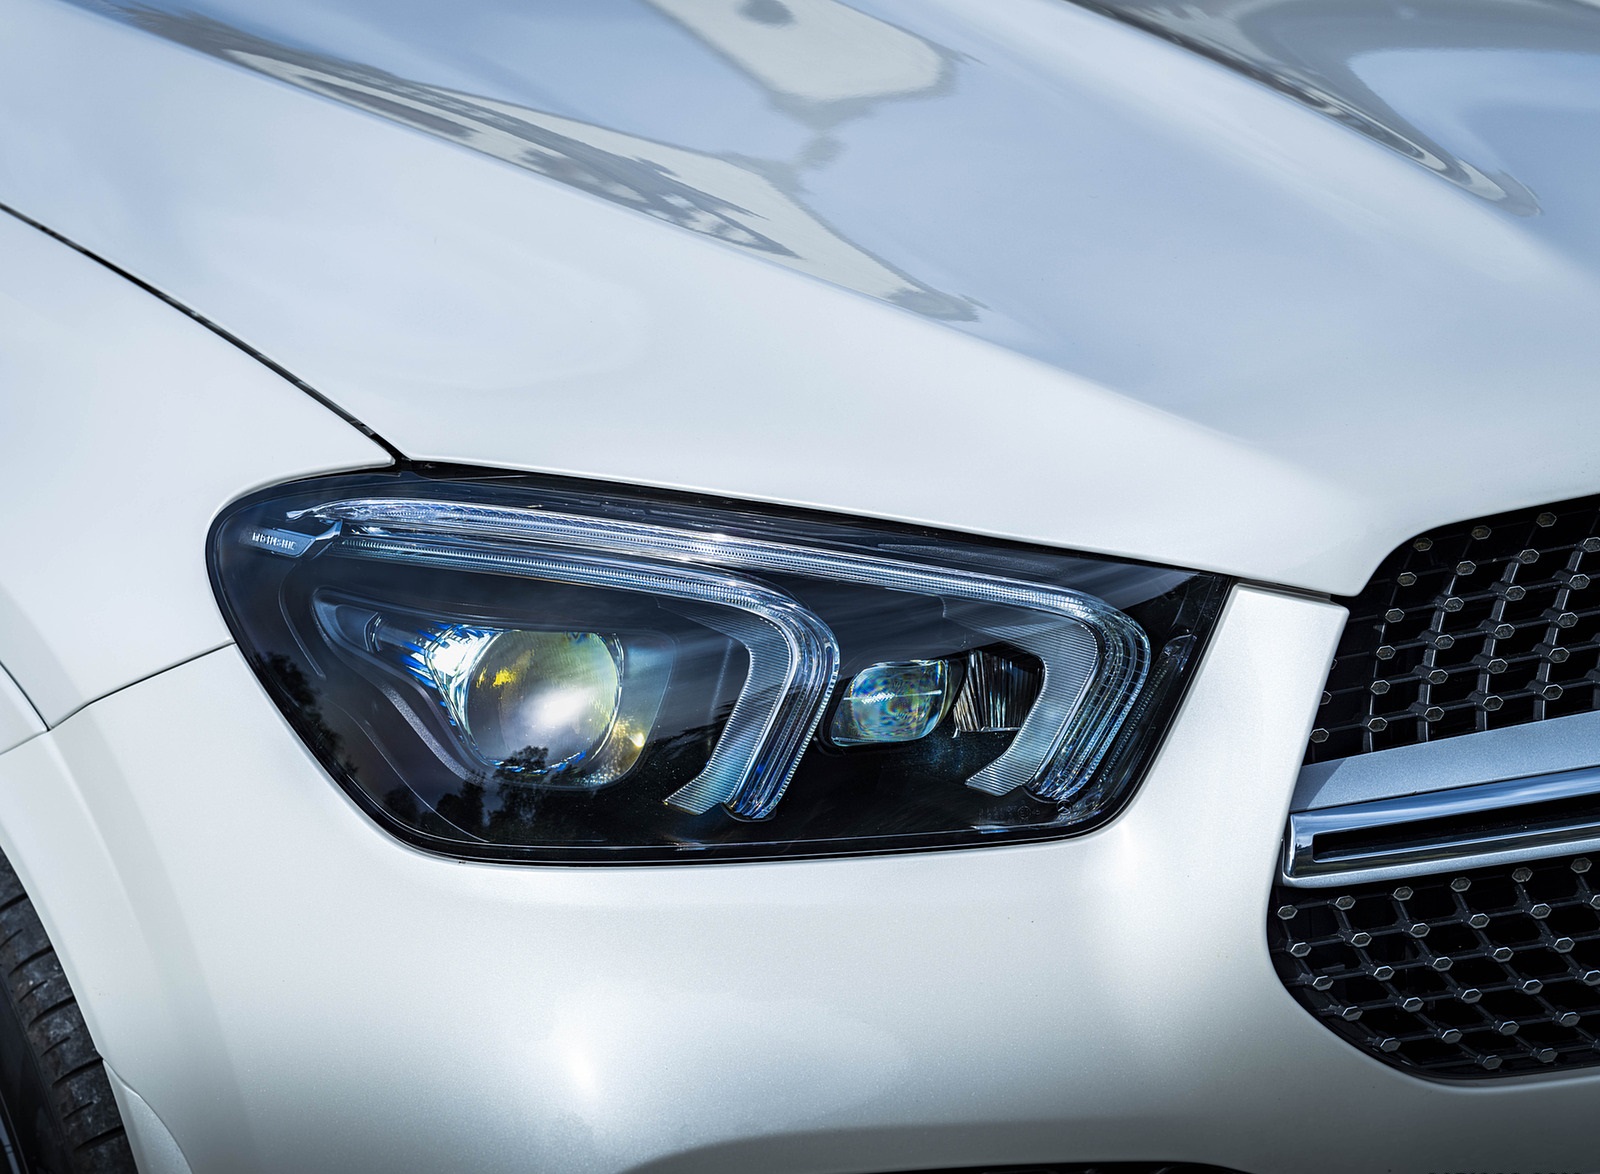 2021 Mercedes-Benz GLE Coupé 400d (UK-Spec) Headlight Wallpapers #54 of 88